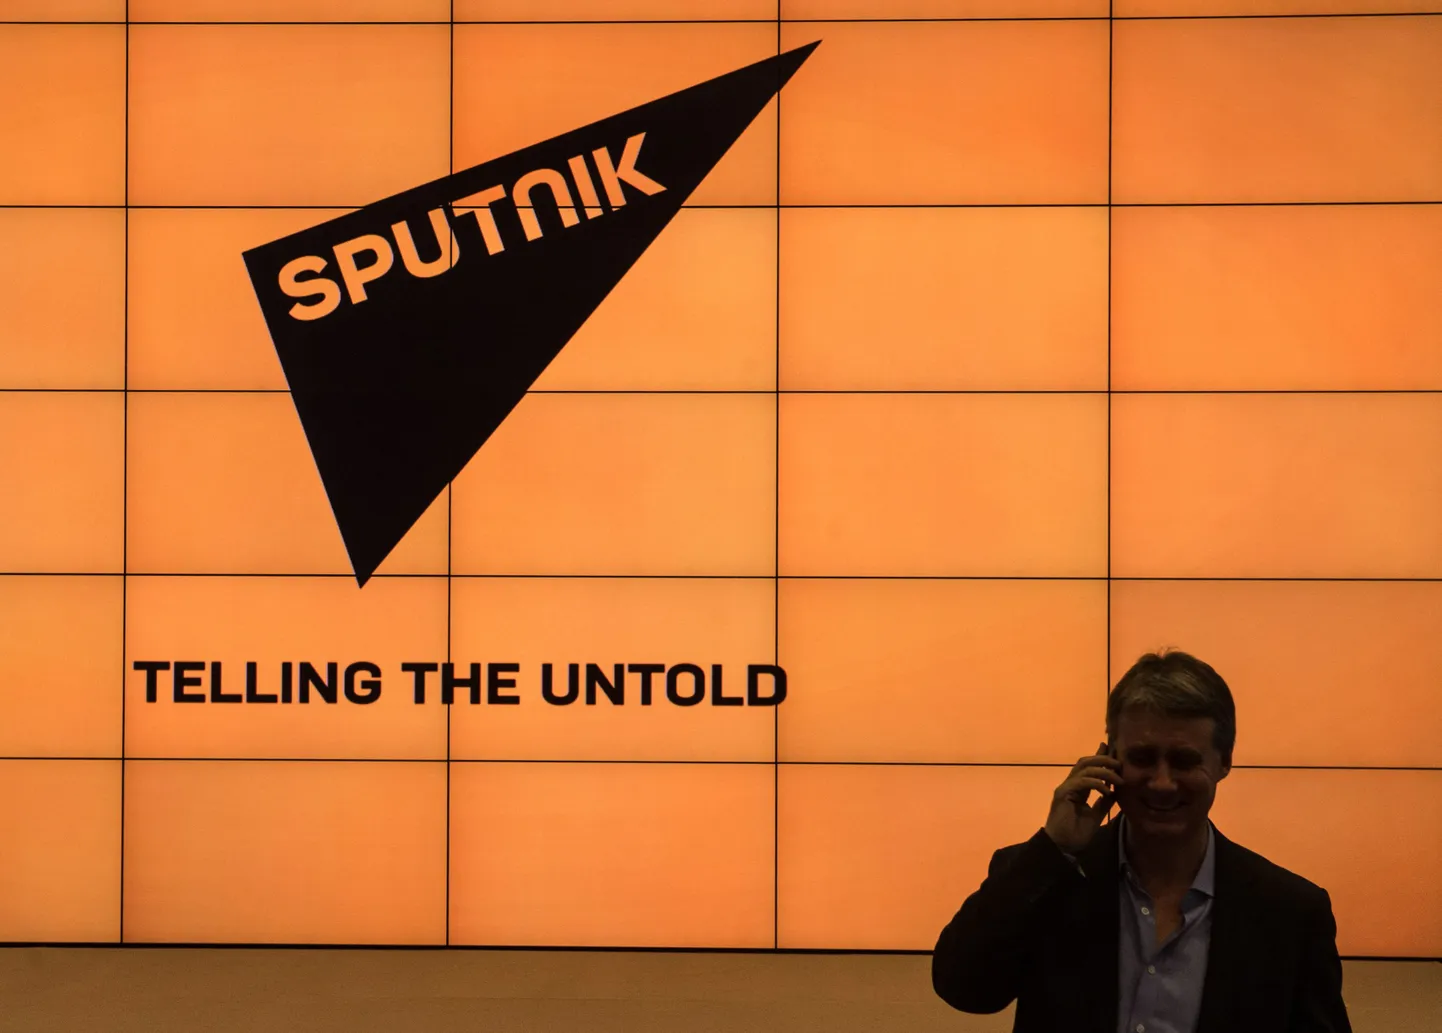 Venemaa rahvusvahelise propagandakanali Sputnik logo.